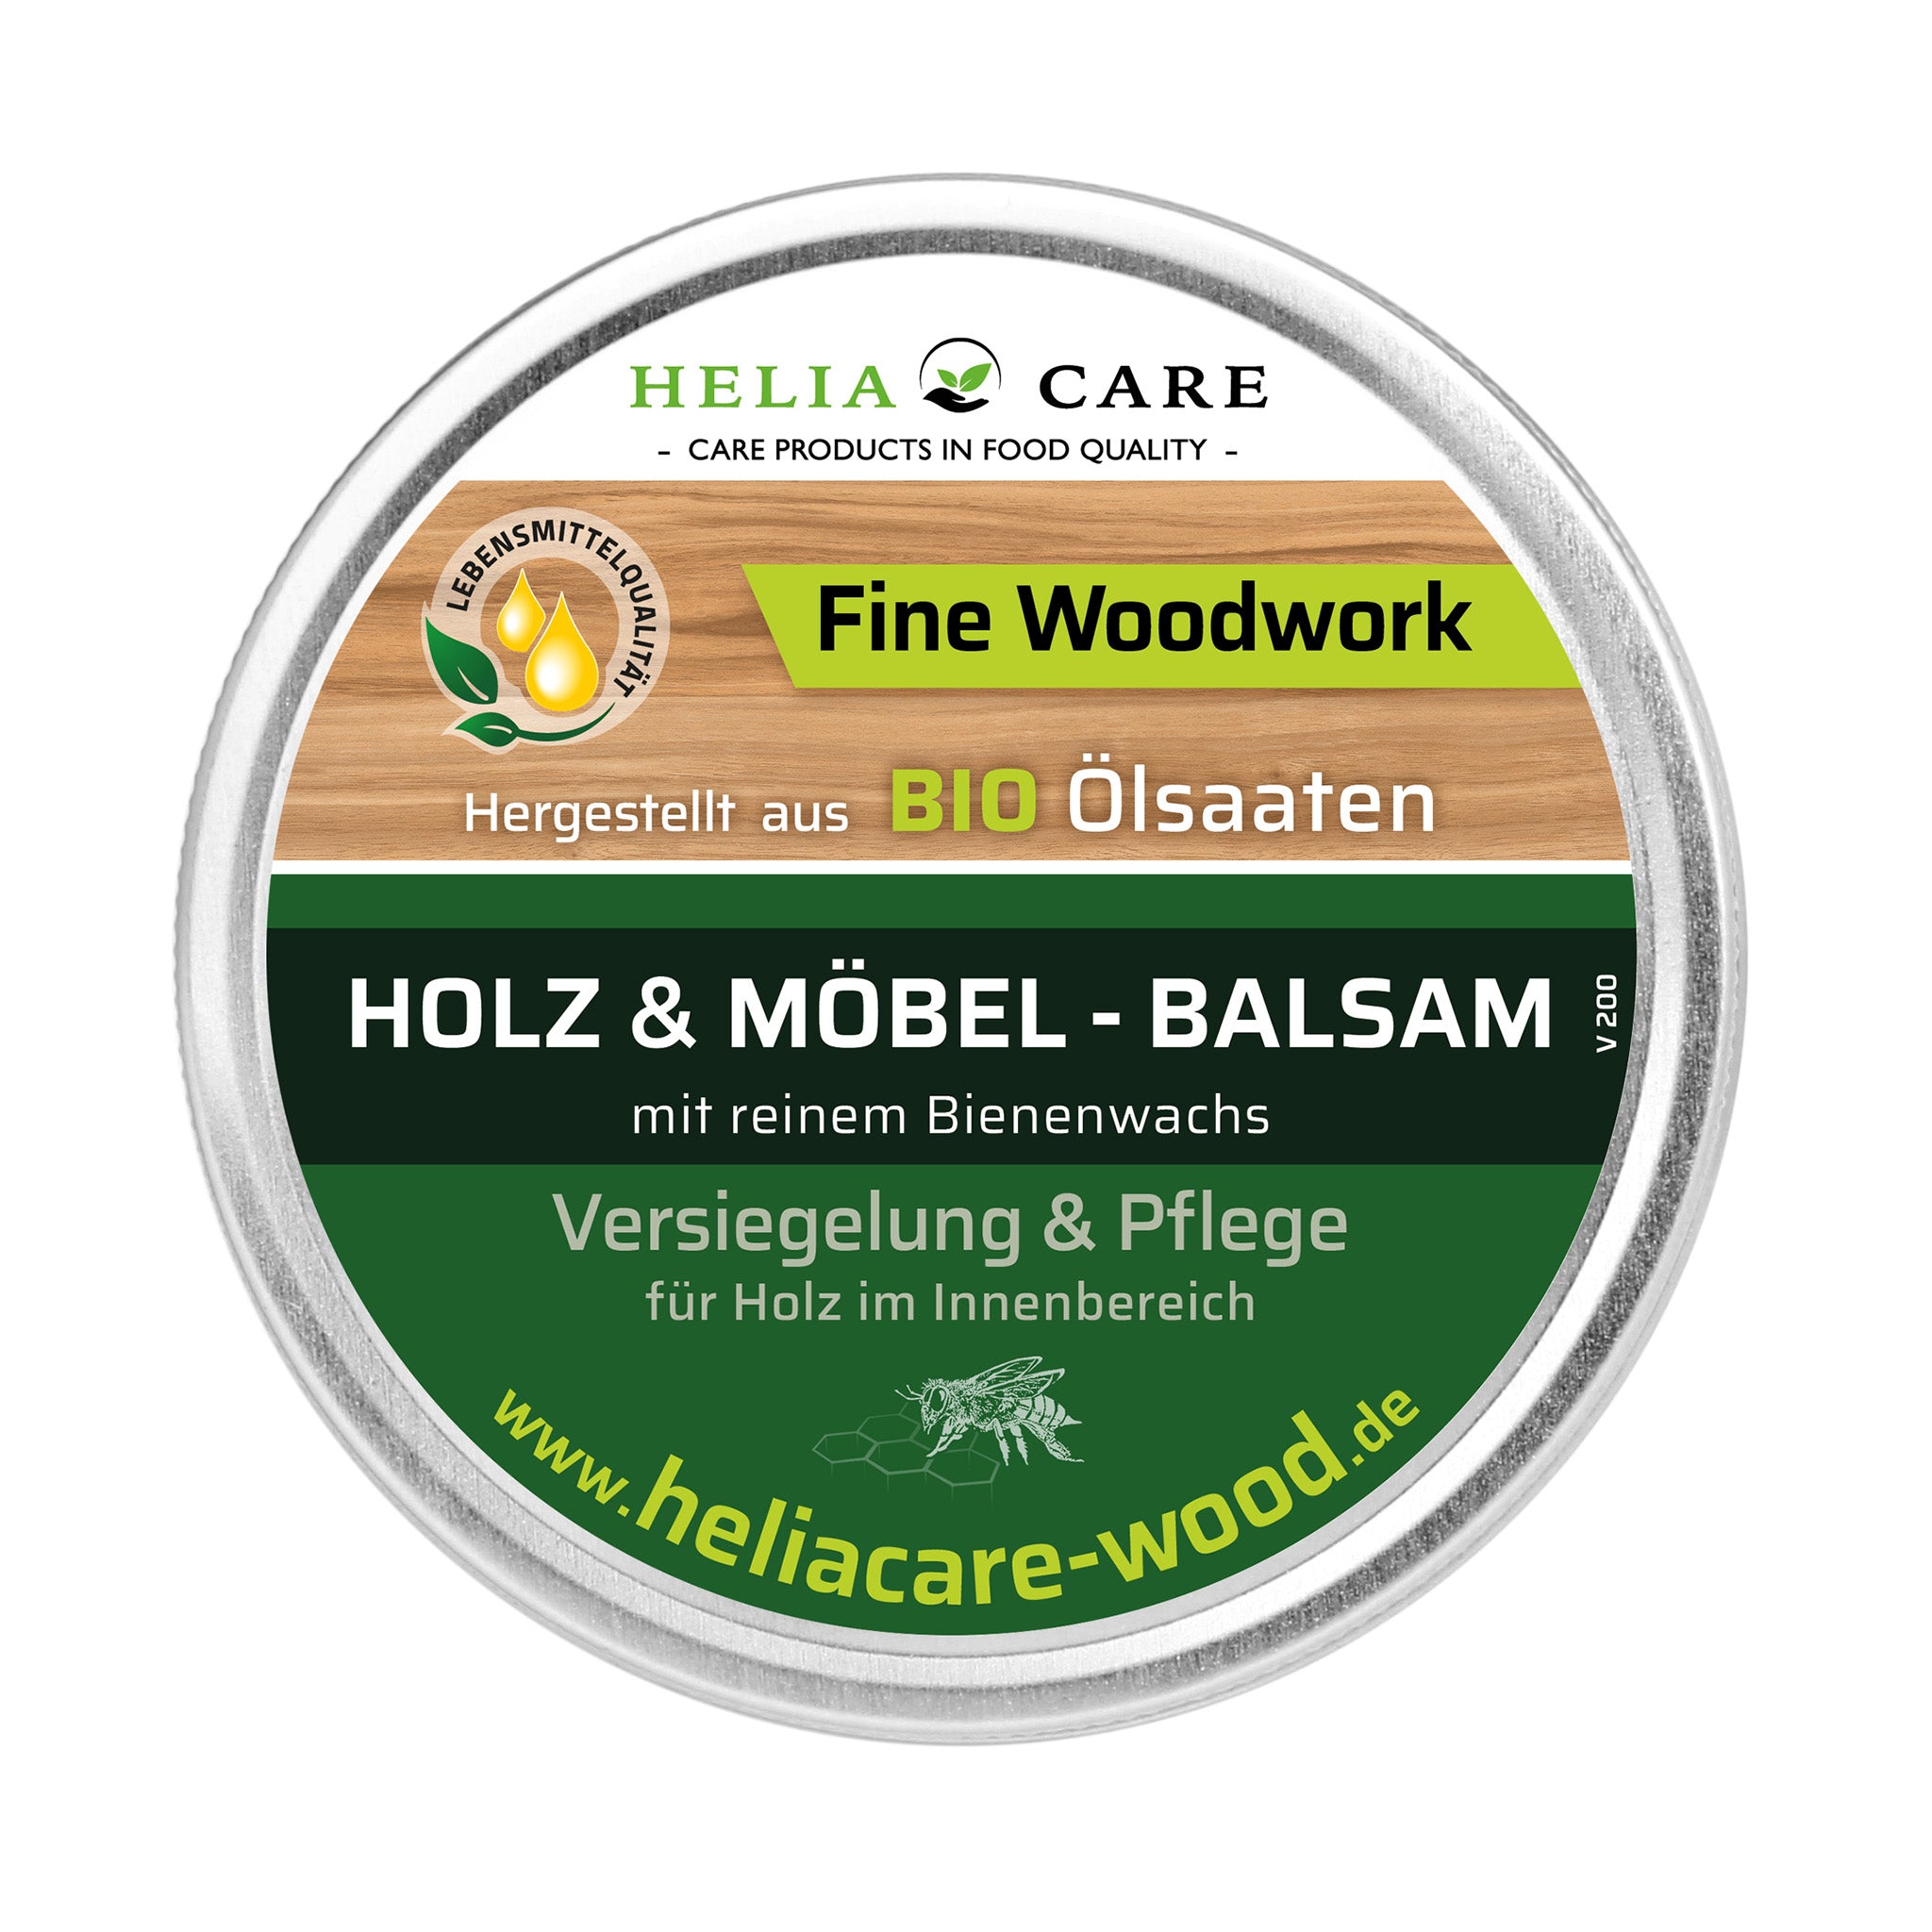 Holz Balsam / Holz Butter(*) in Lebensmittelqualität von HeliaCARE